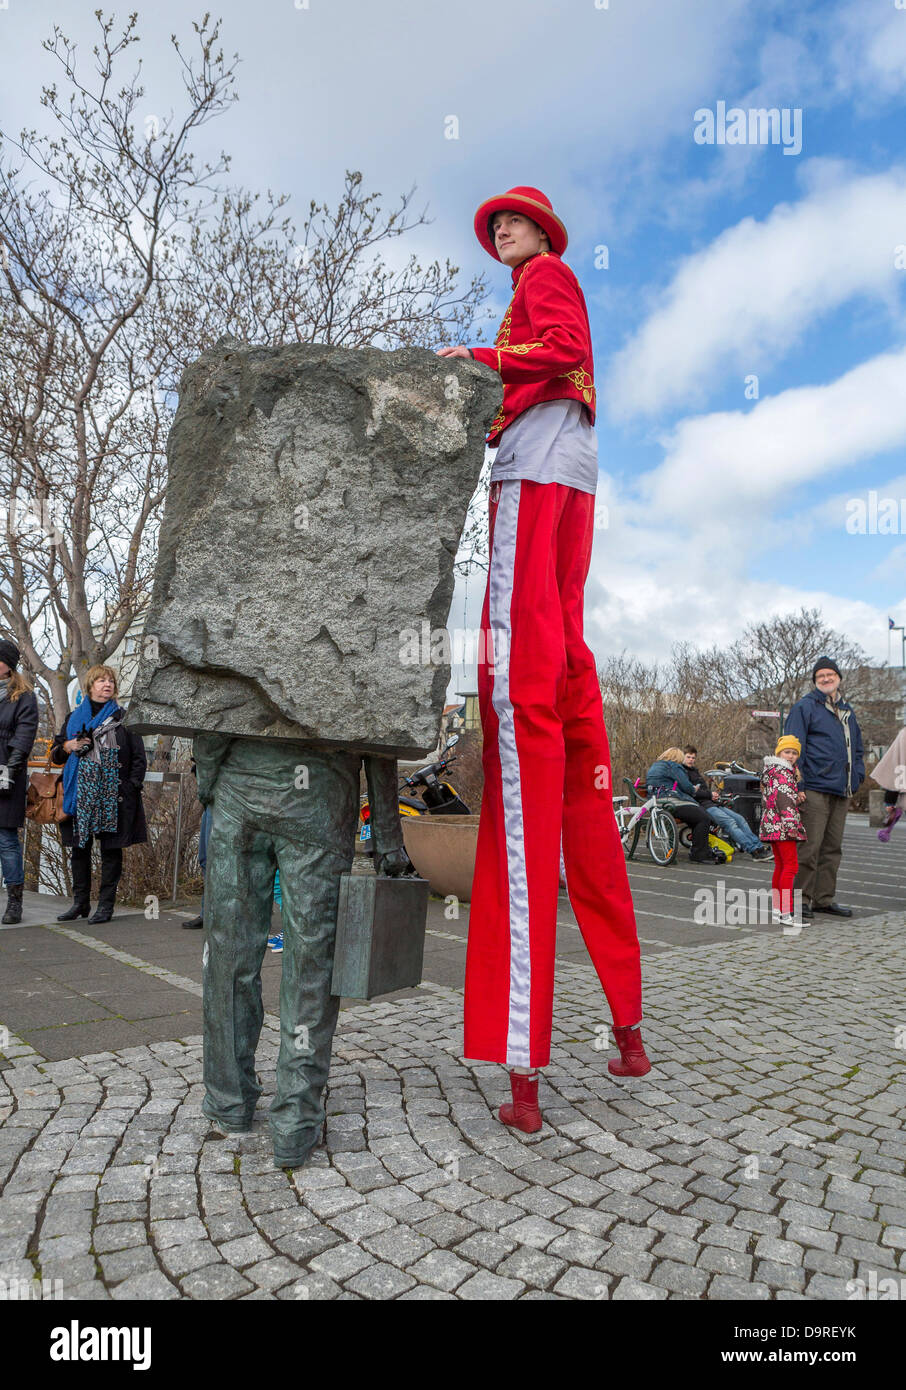 Walking on Stilts, Children's Cultural Festival, Reykjavik, Iceland. Stock Photo